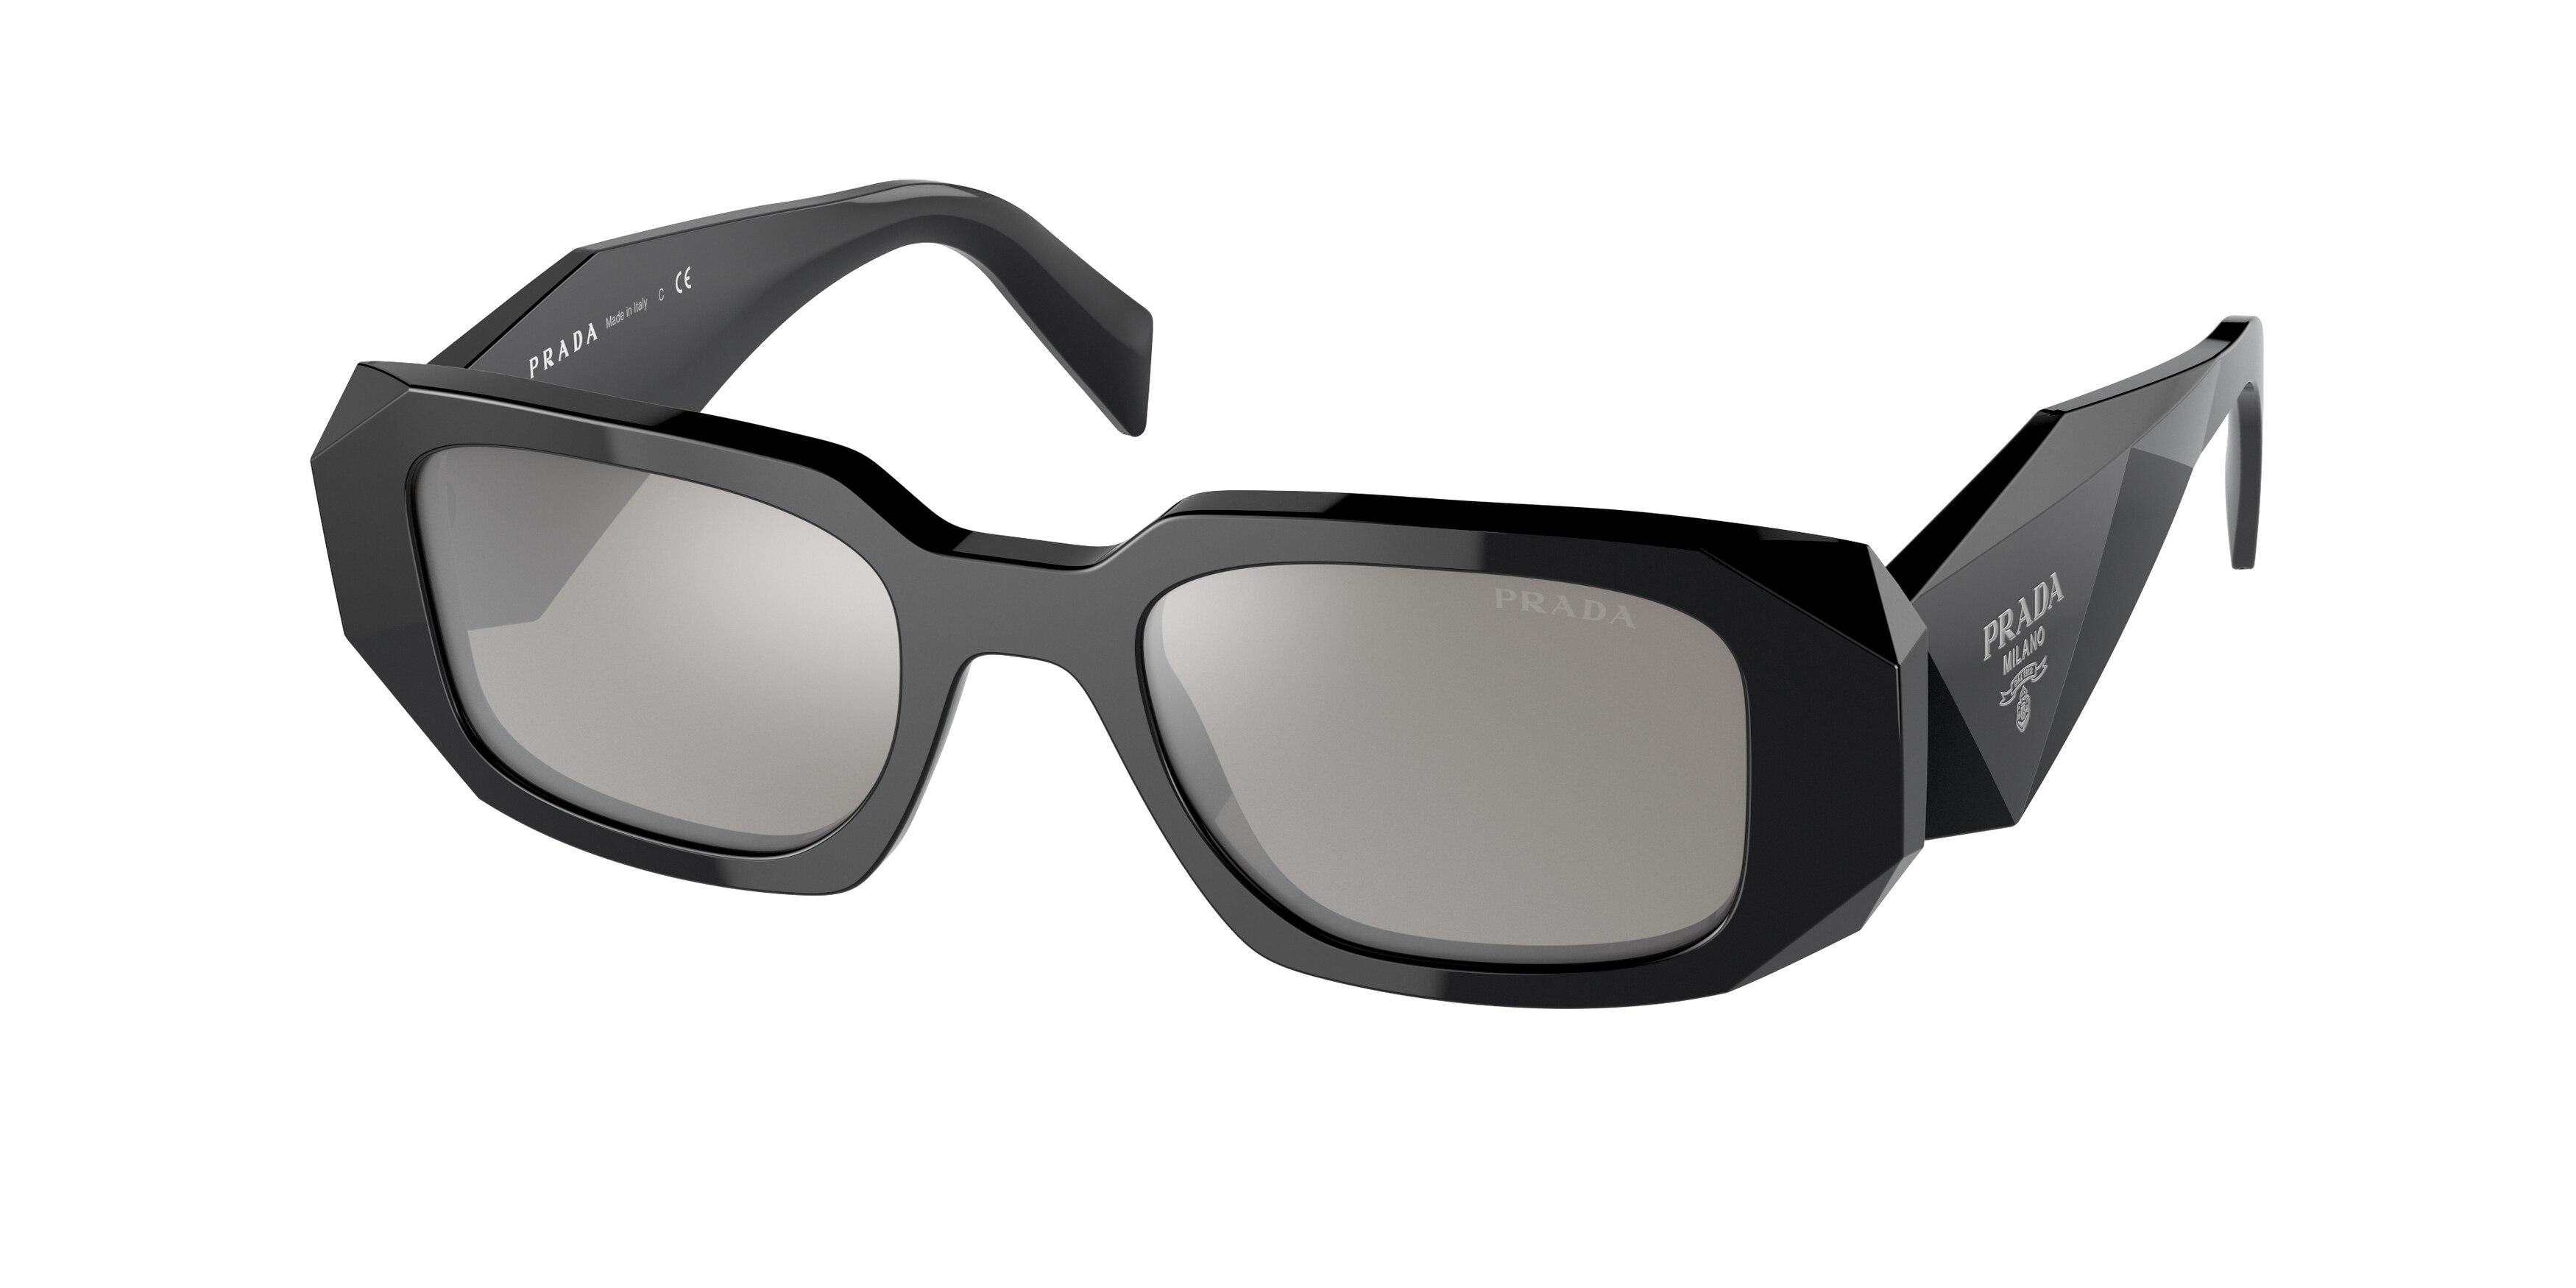 Prada PR 09ZS Men Sunglasses - Black